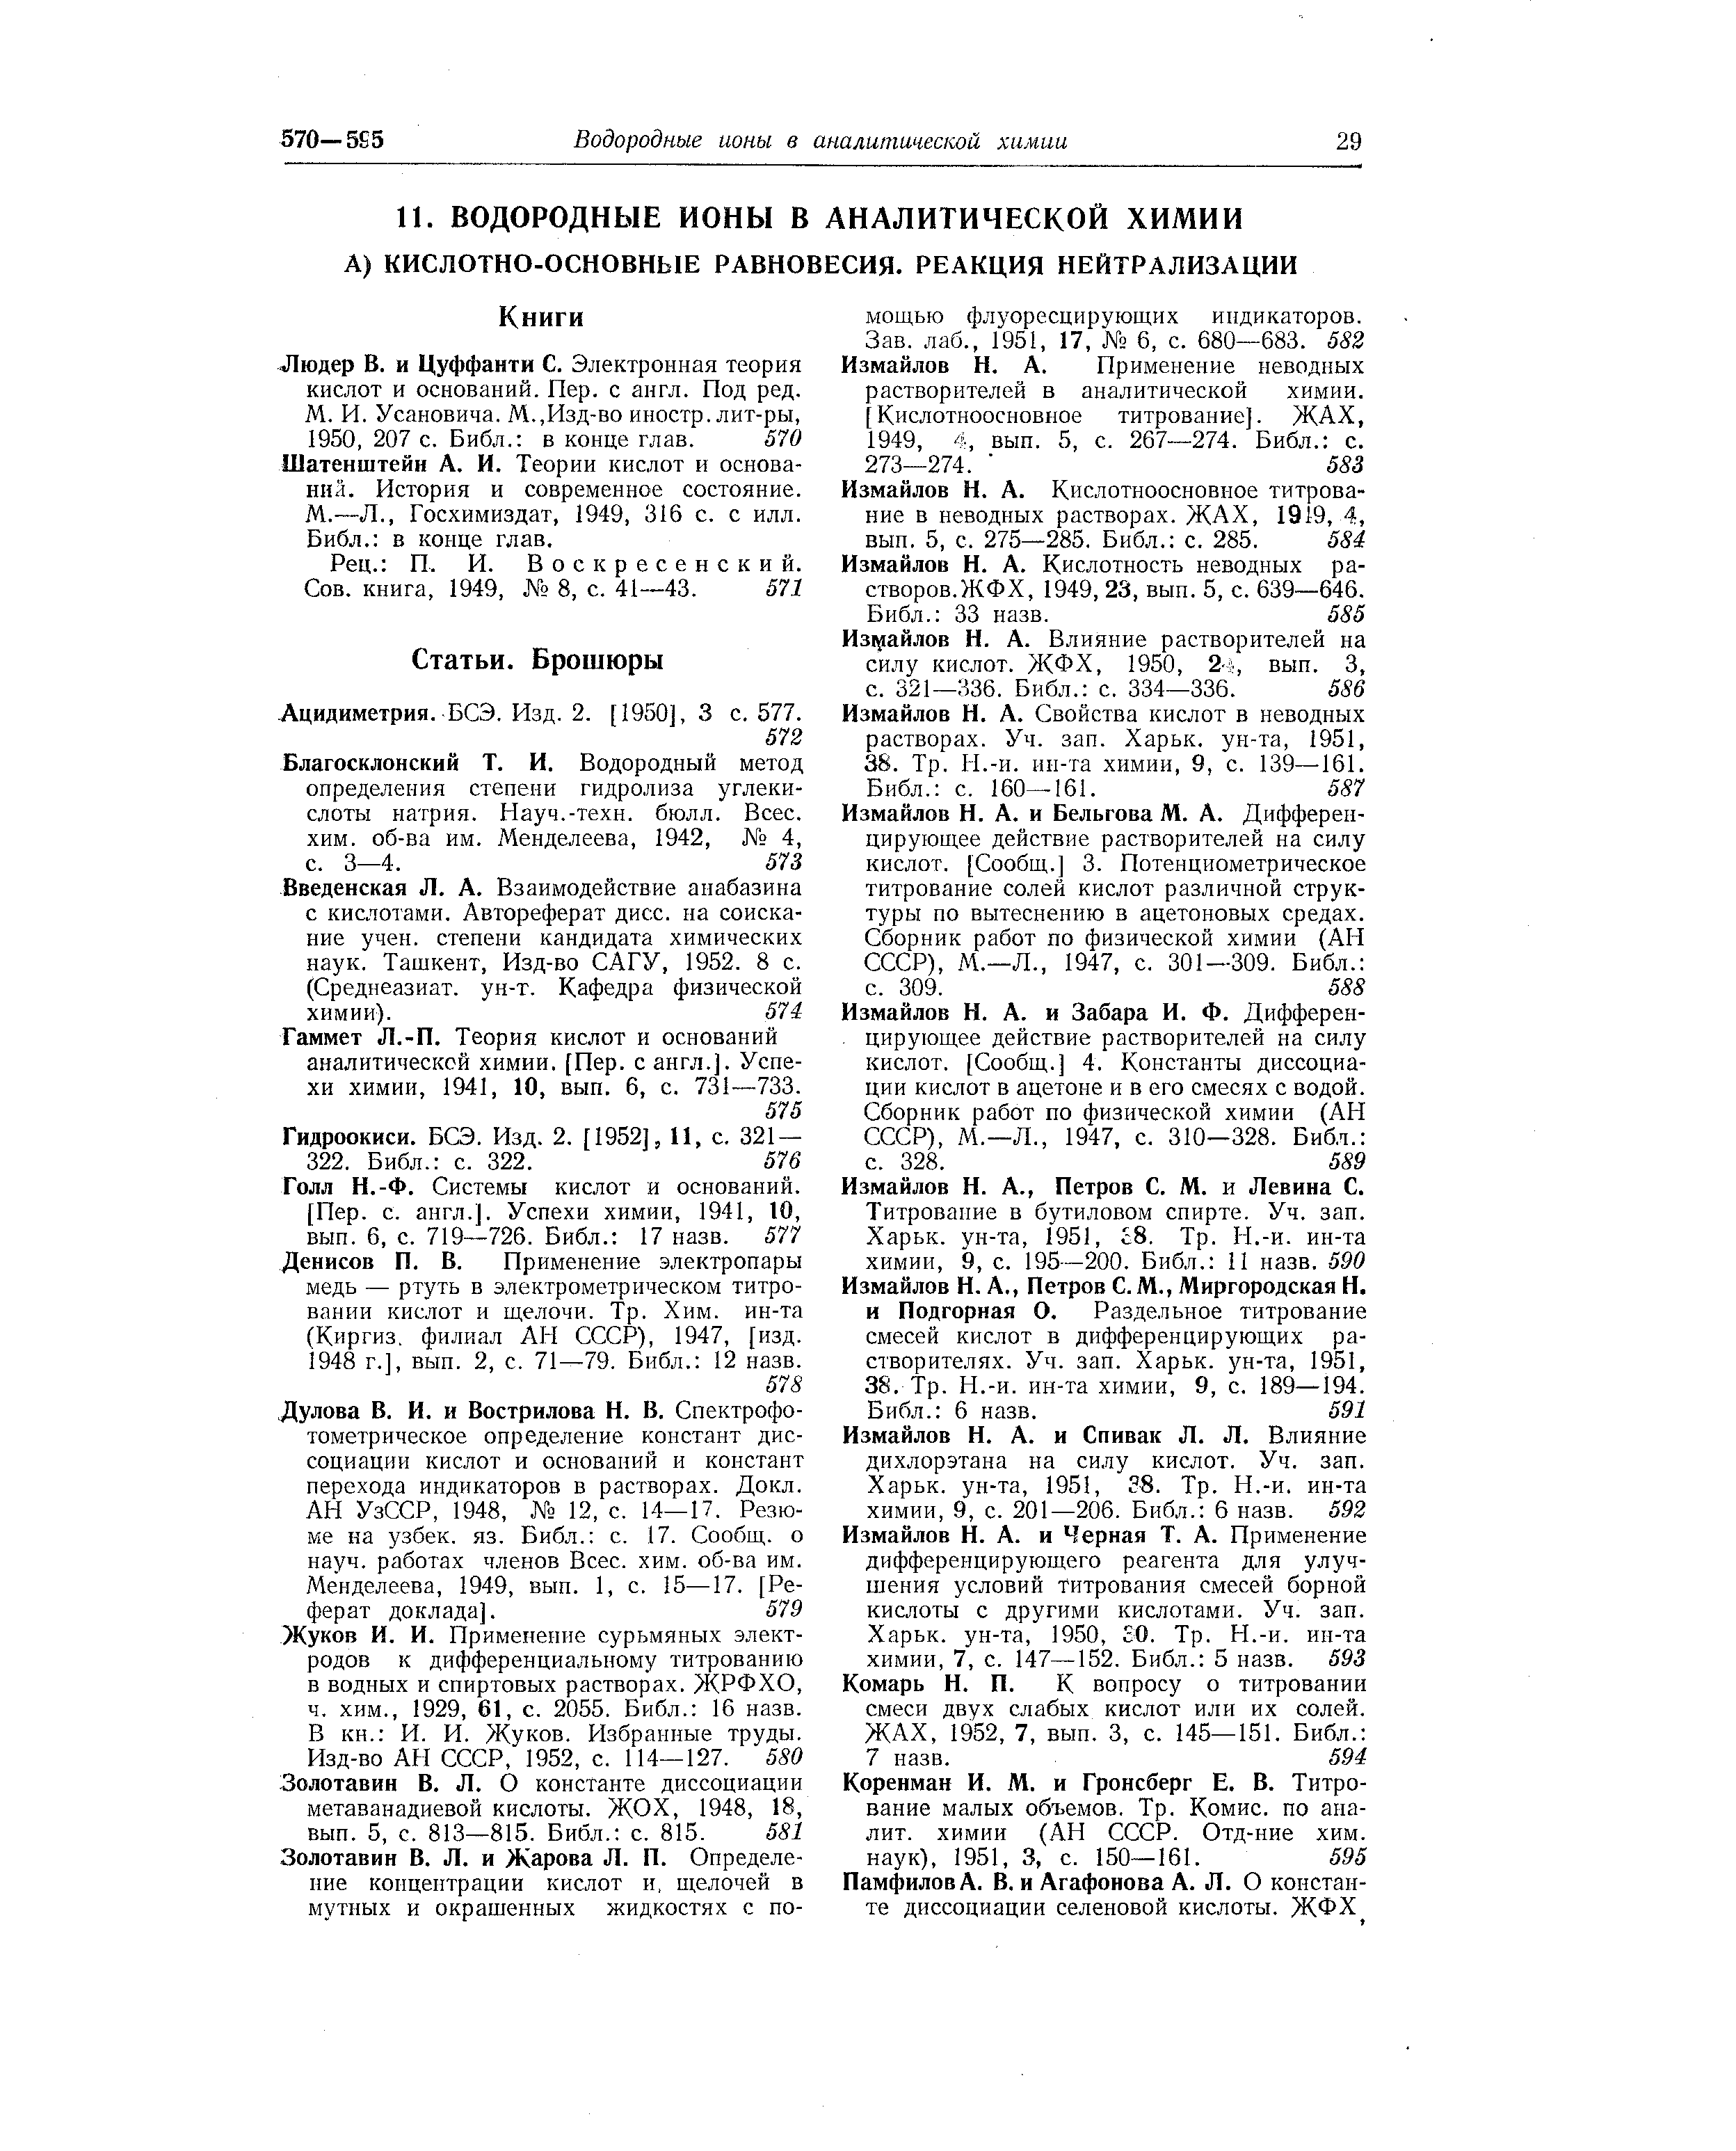 Ацидиметрия. БСЭ. Изд. 2. [1950], 3 с. 577.